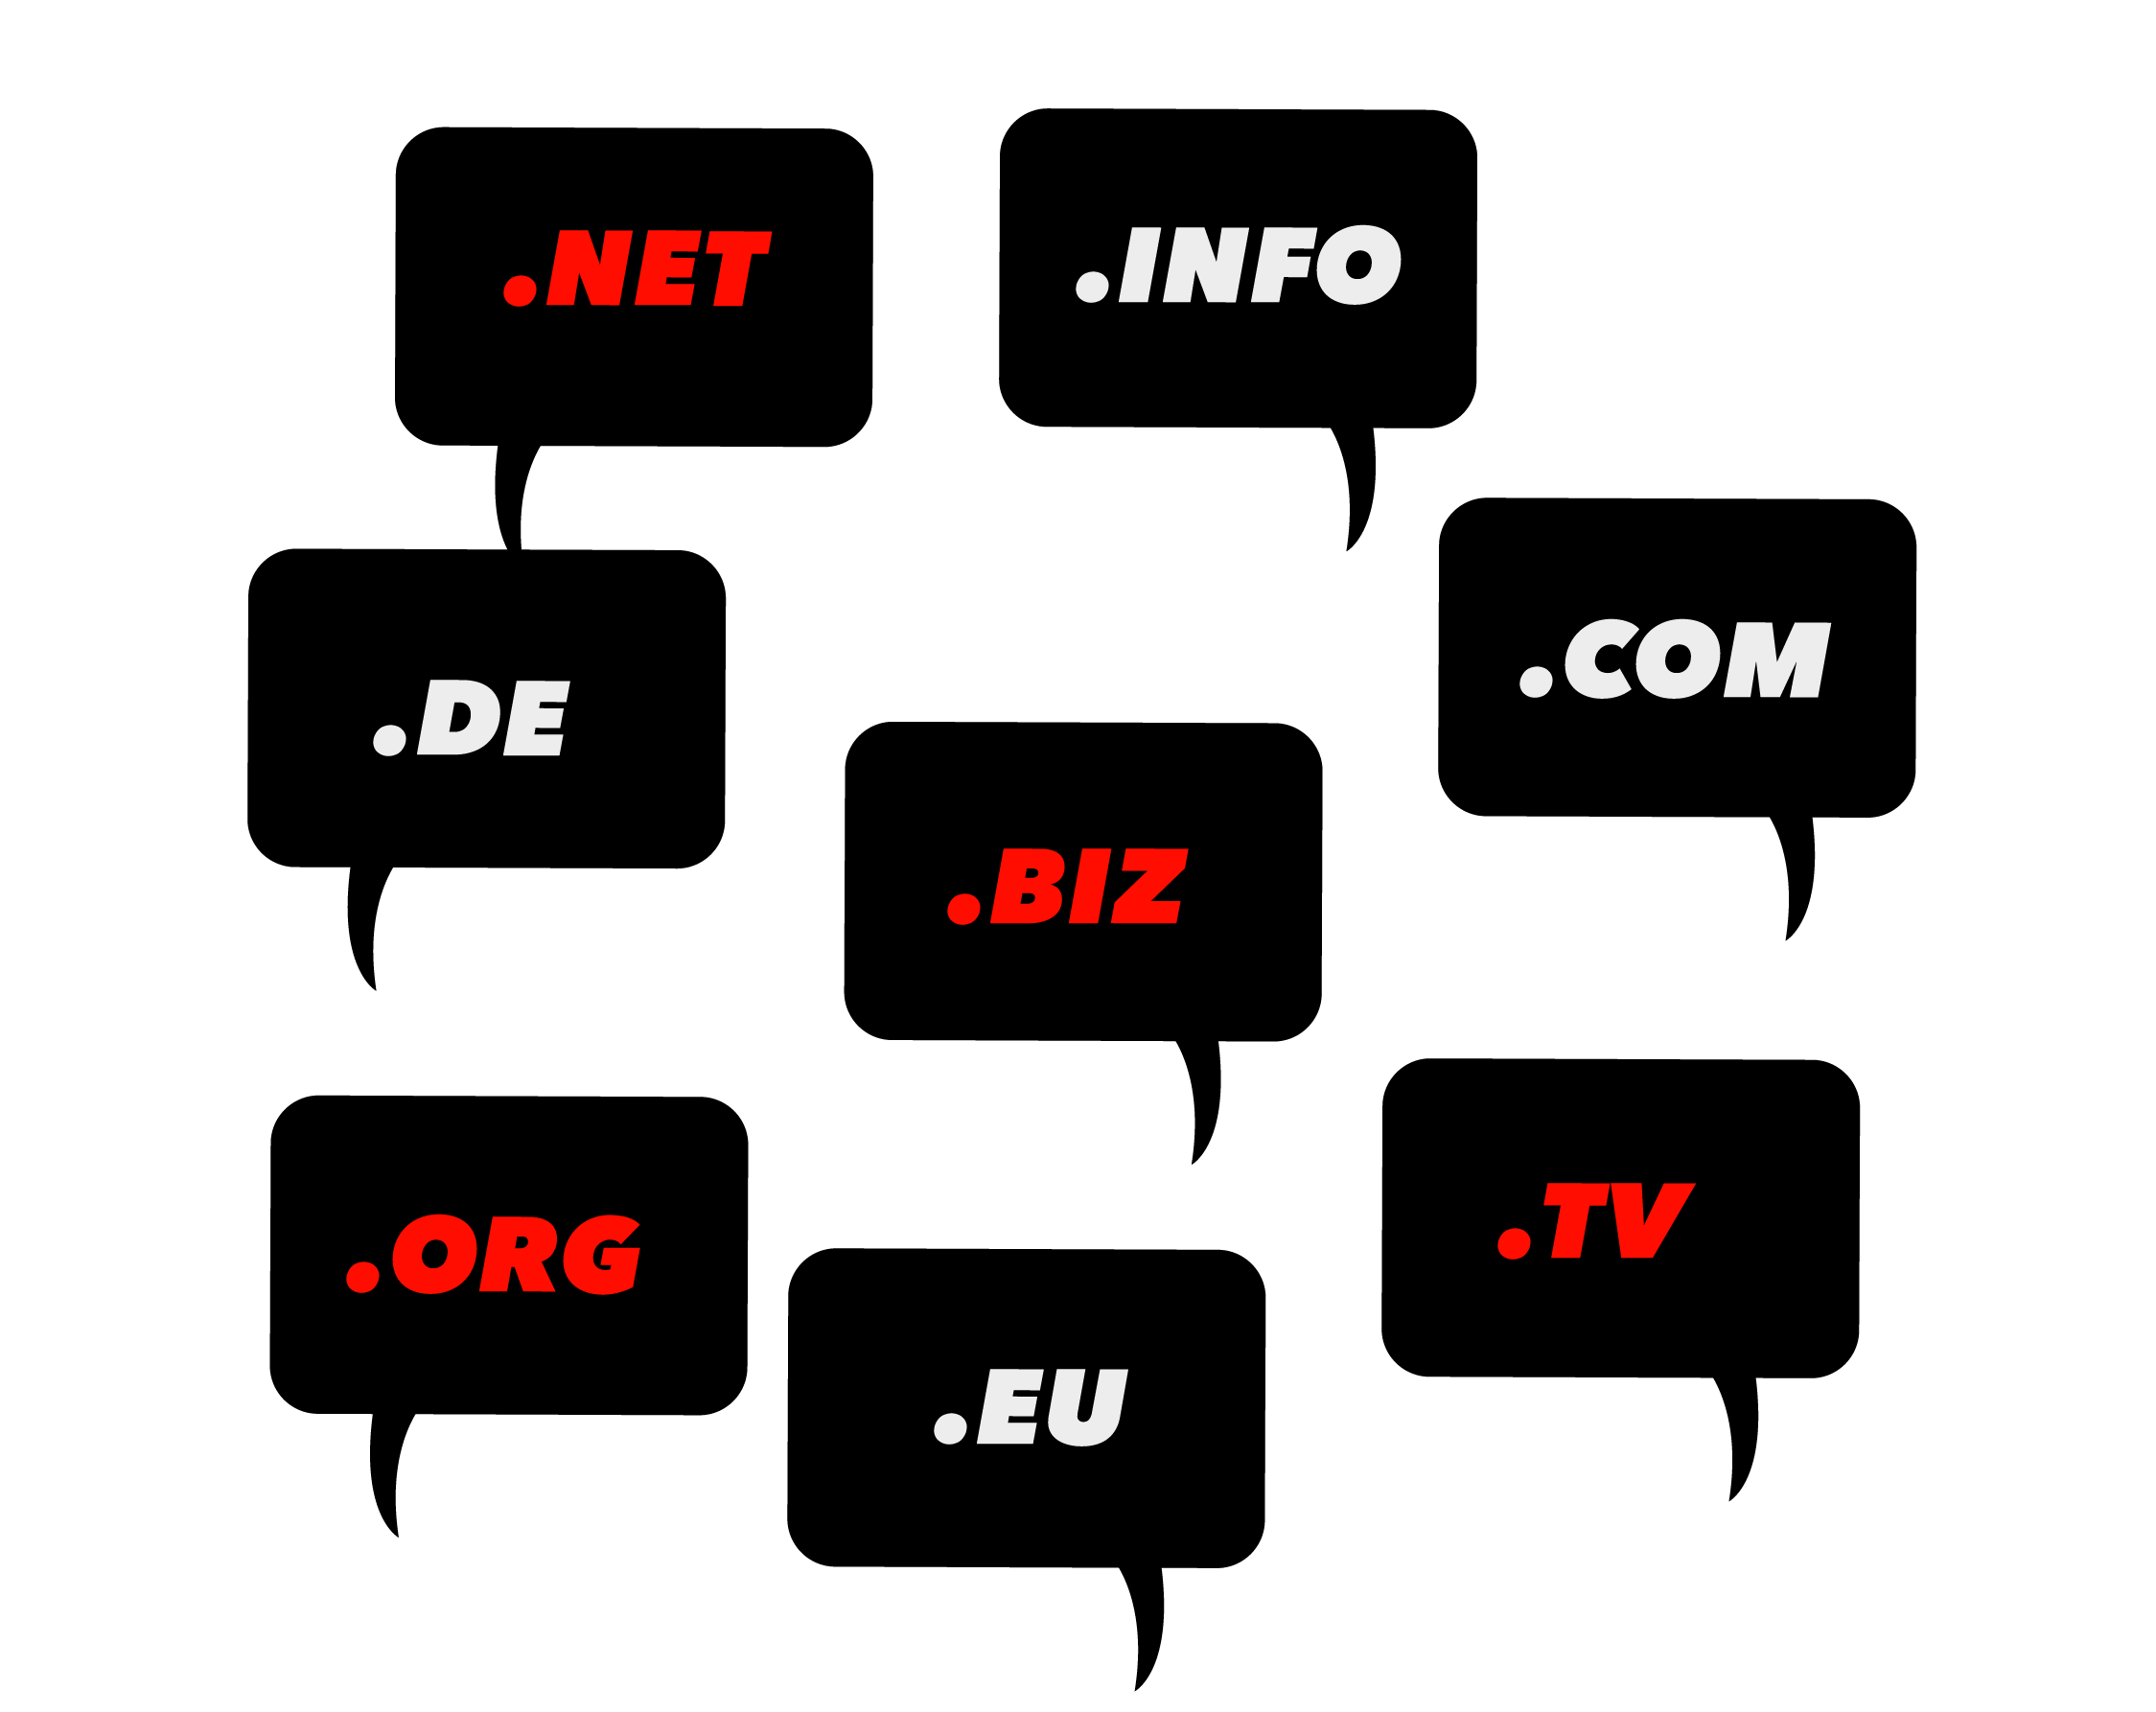 Bunte Schilder zeigen verschiedene Domain-Endungen, wie .shop, .web, .inc